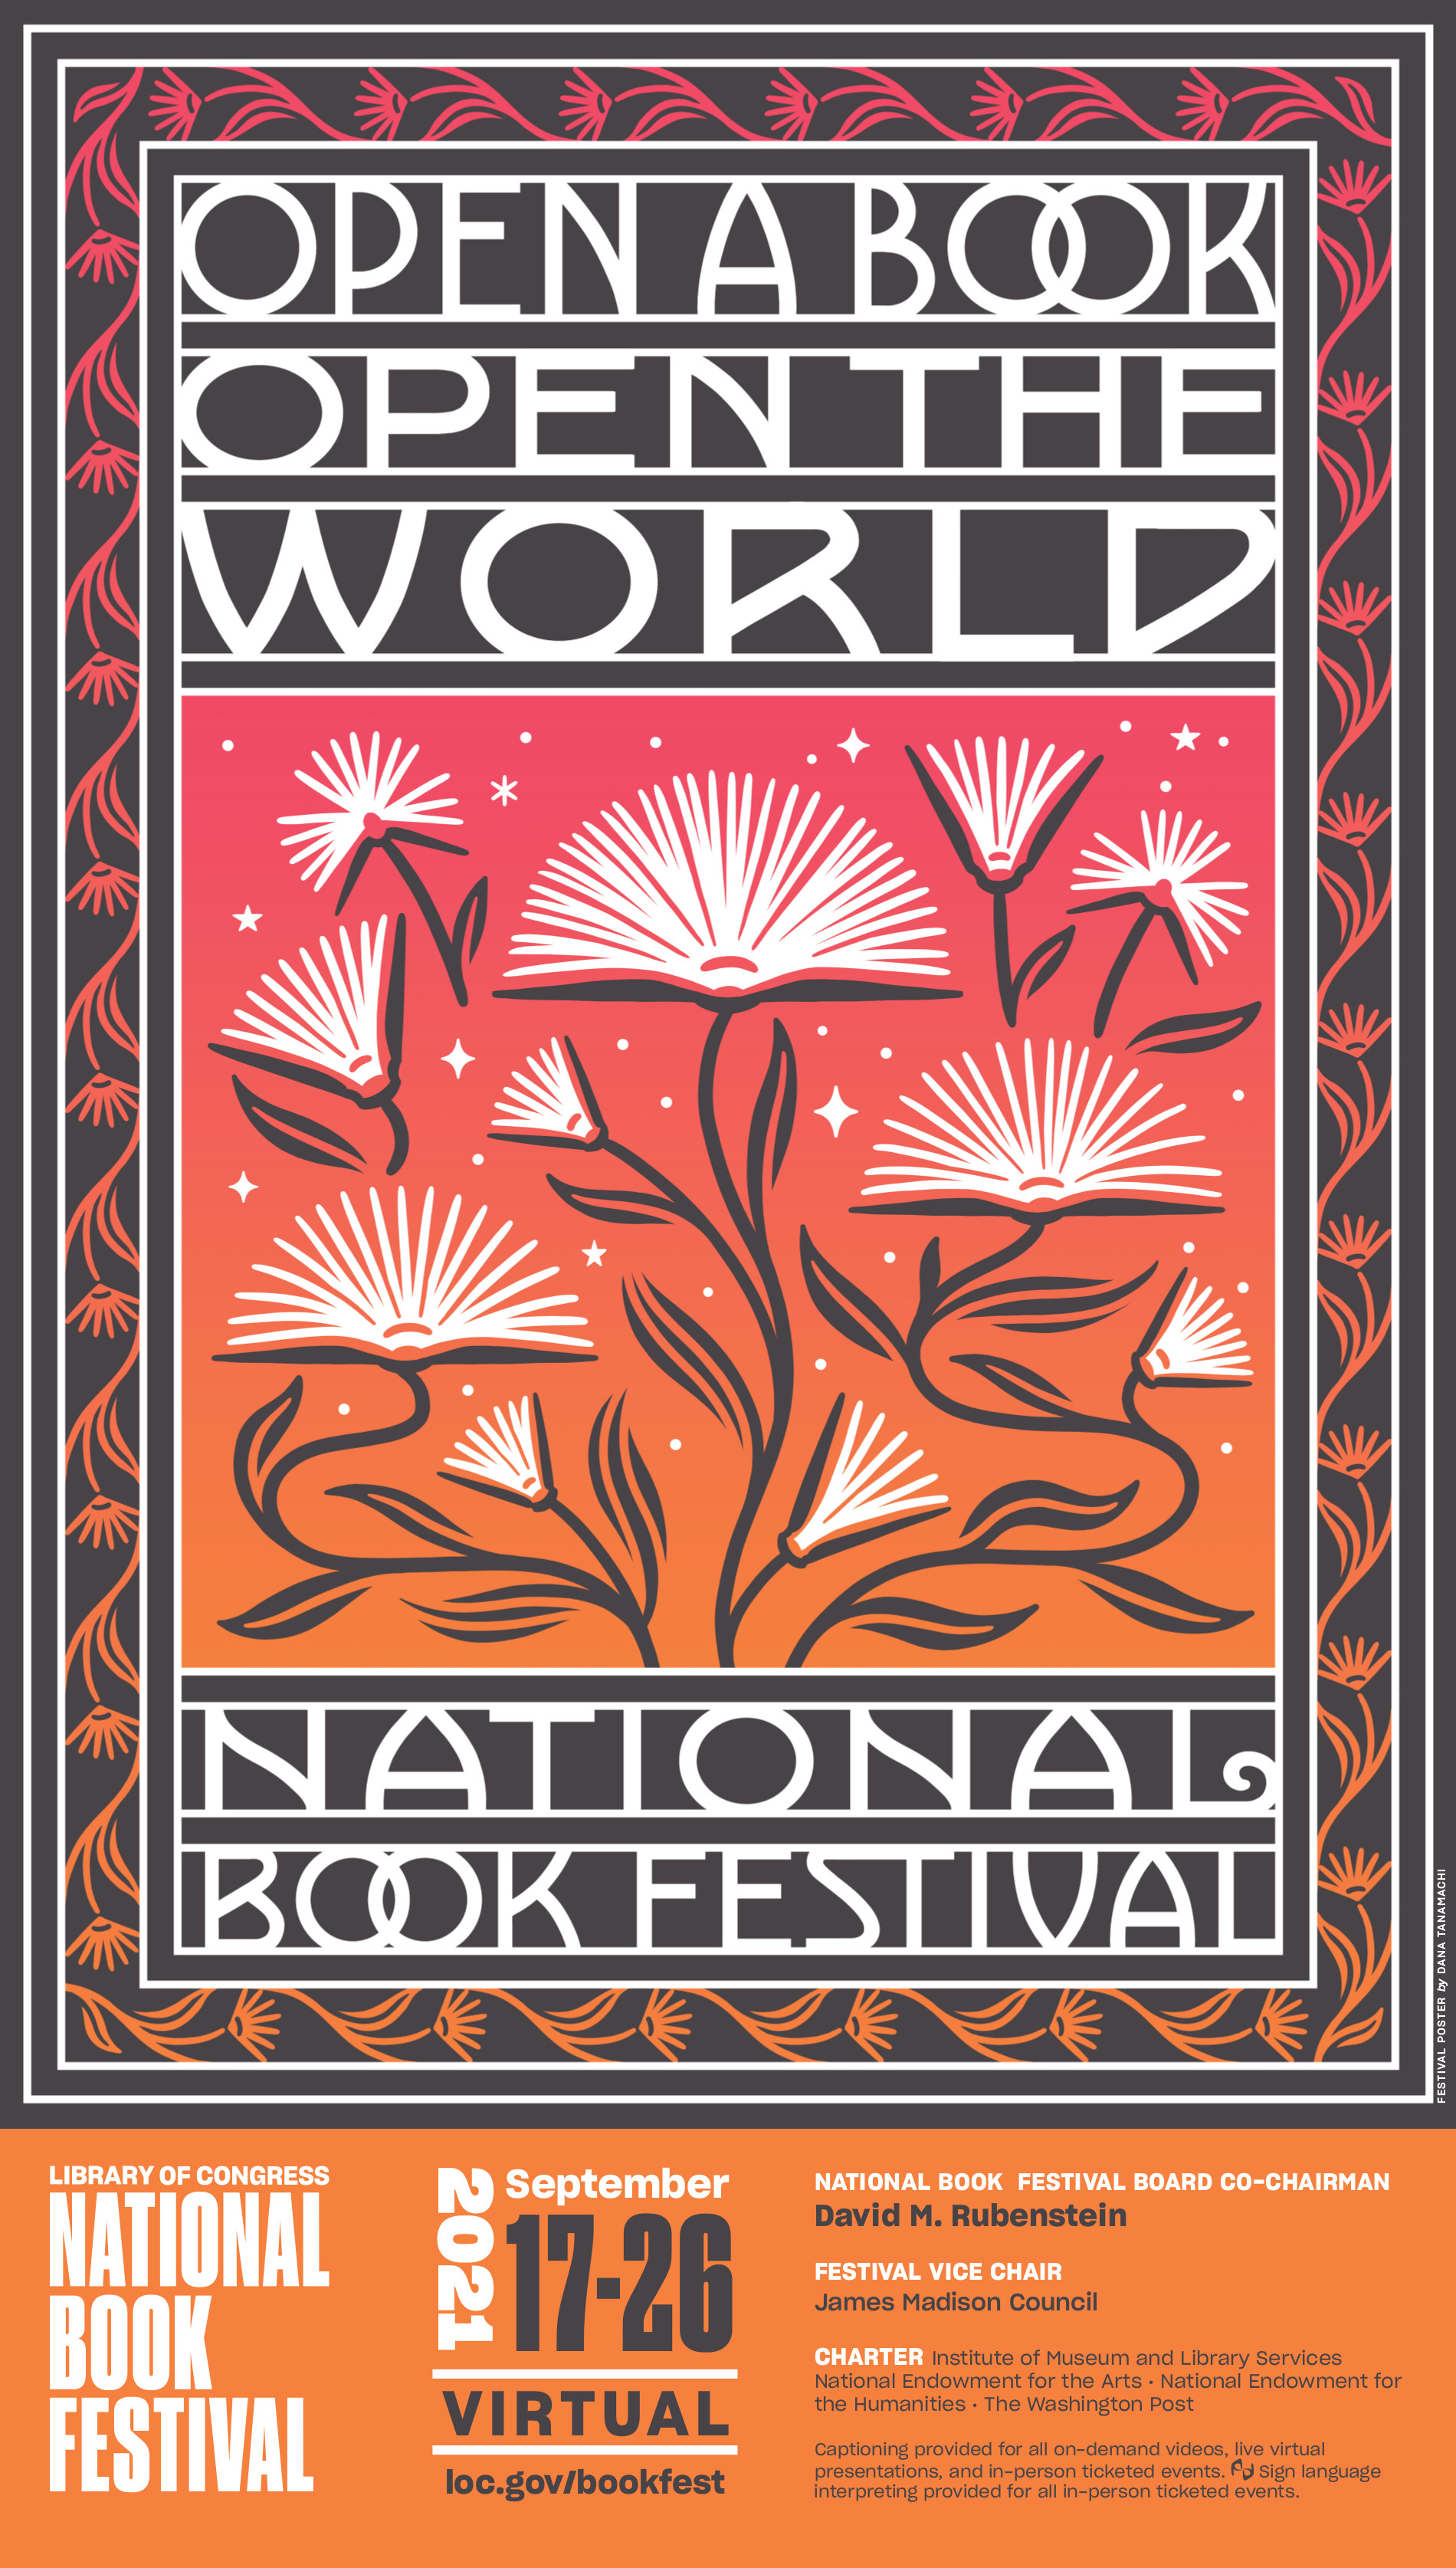 LoC National Book Festival 2021 promotional poster designed by Dana Tanamachi